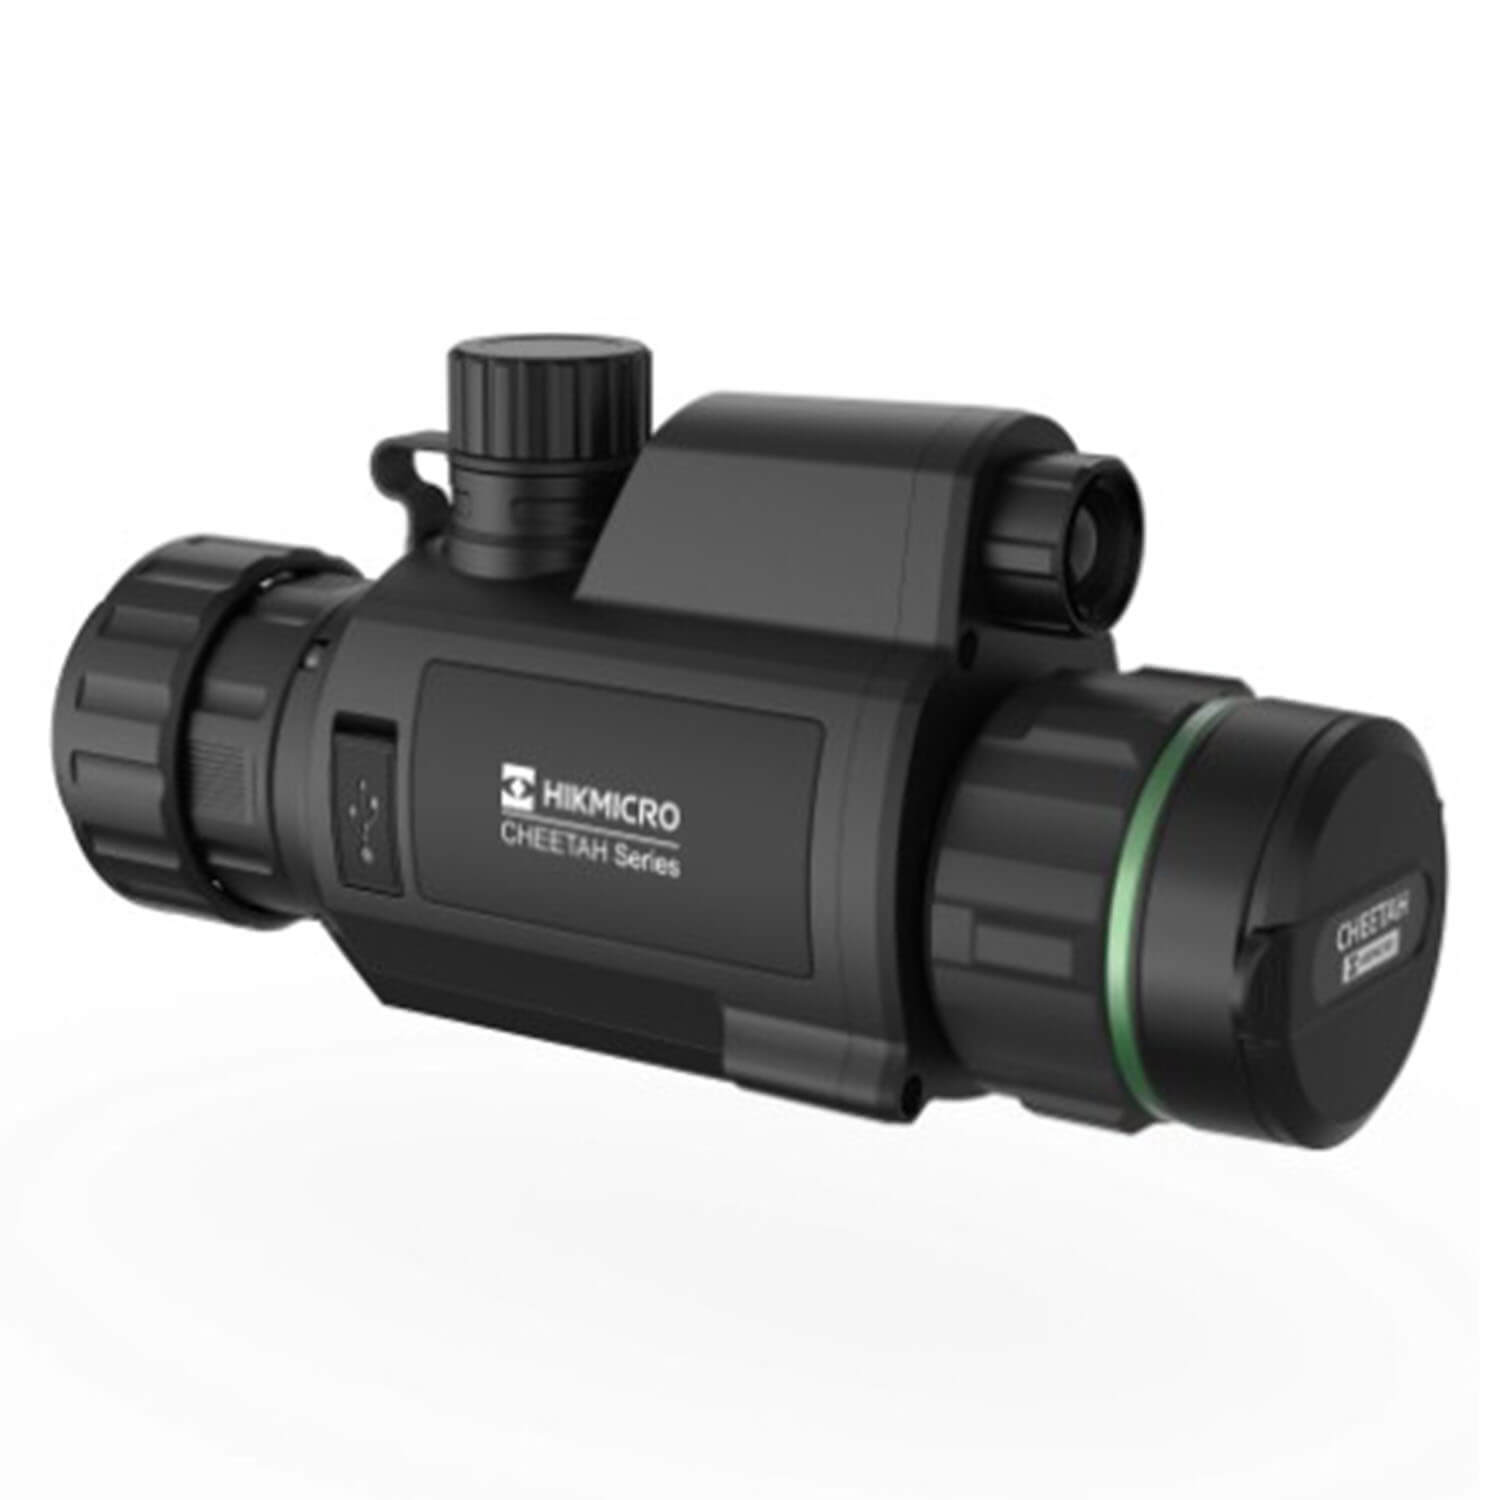 Hikmicro digital night vision device Cheetah 940nm - Optics